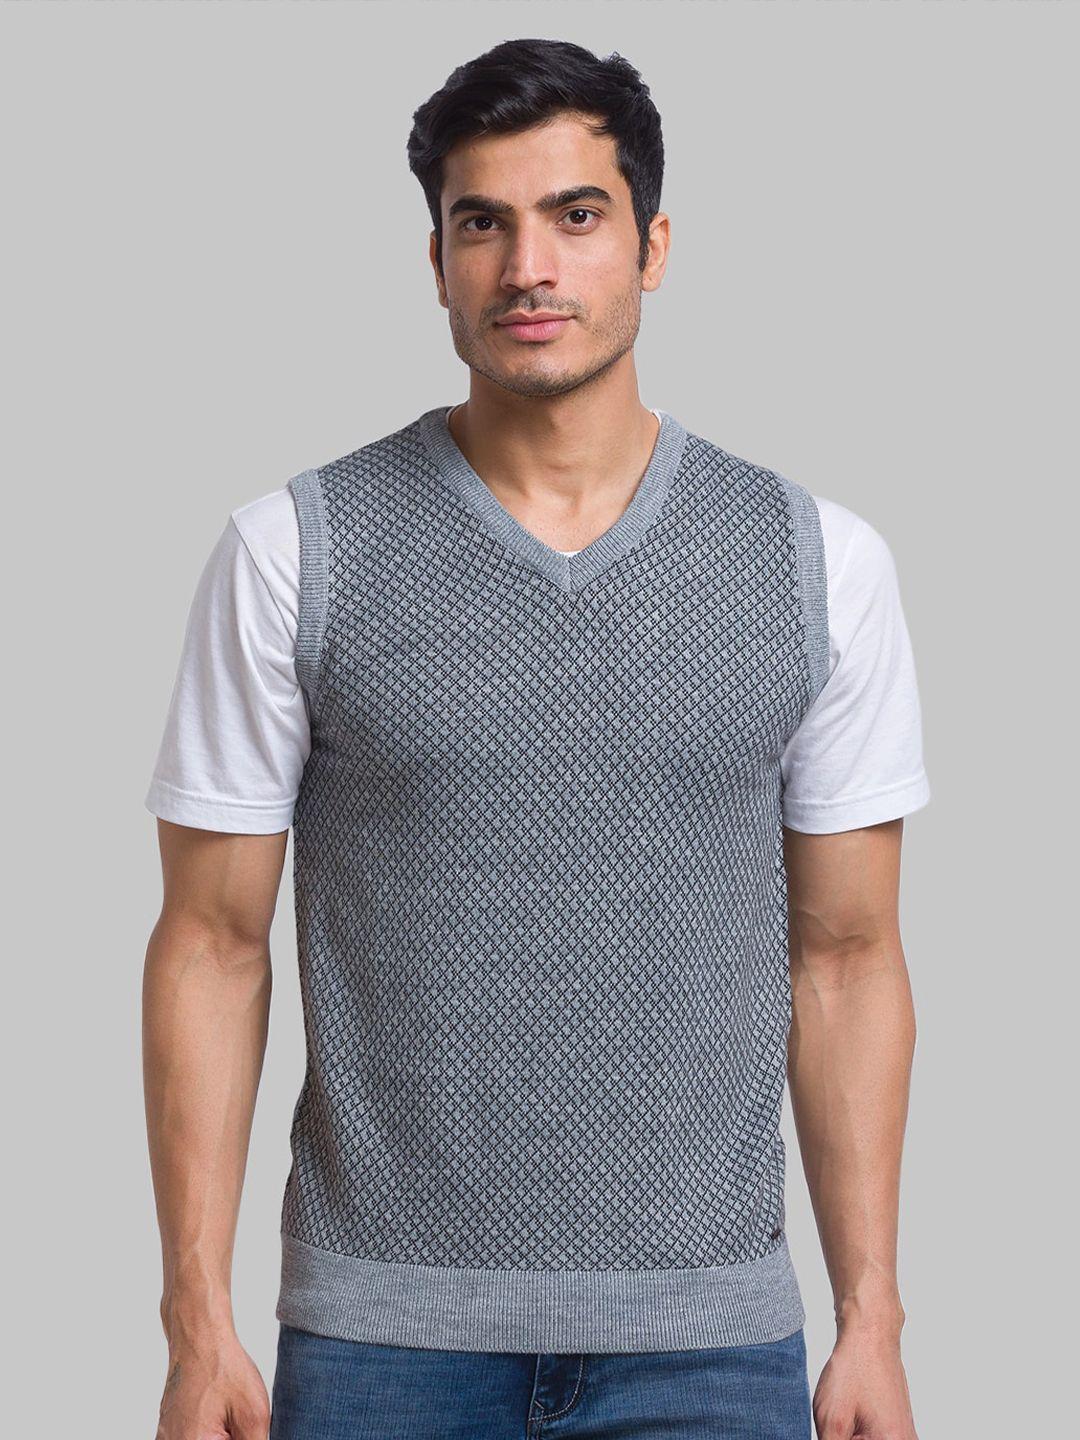 Parx Men Printed Pullover Acrylic Sweater Vest